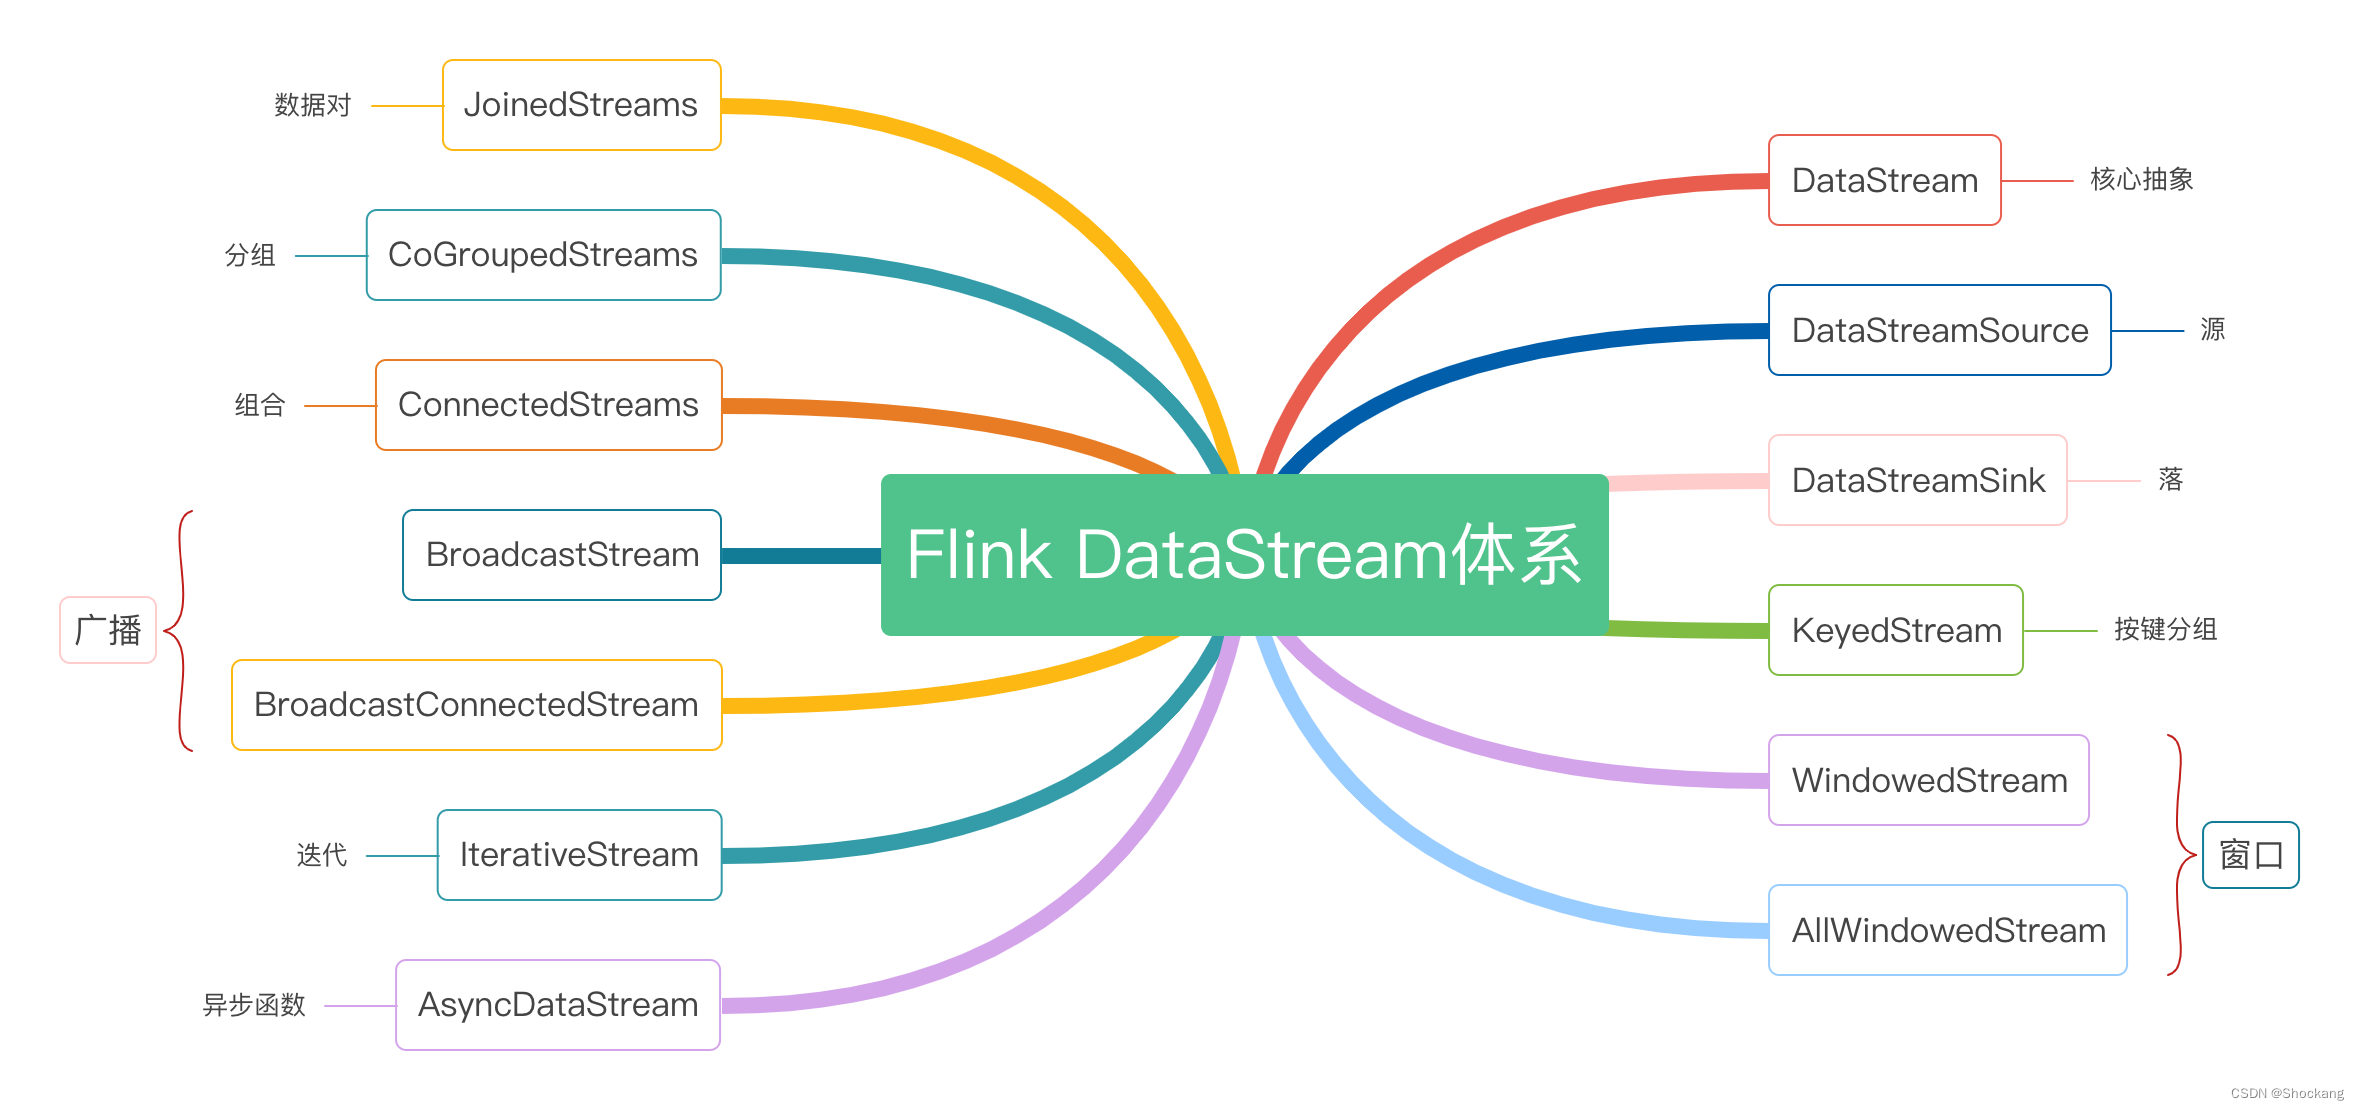 Flink DataStream 体系